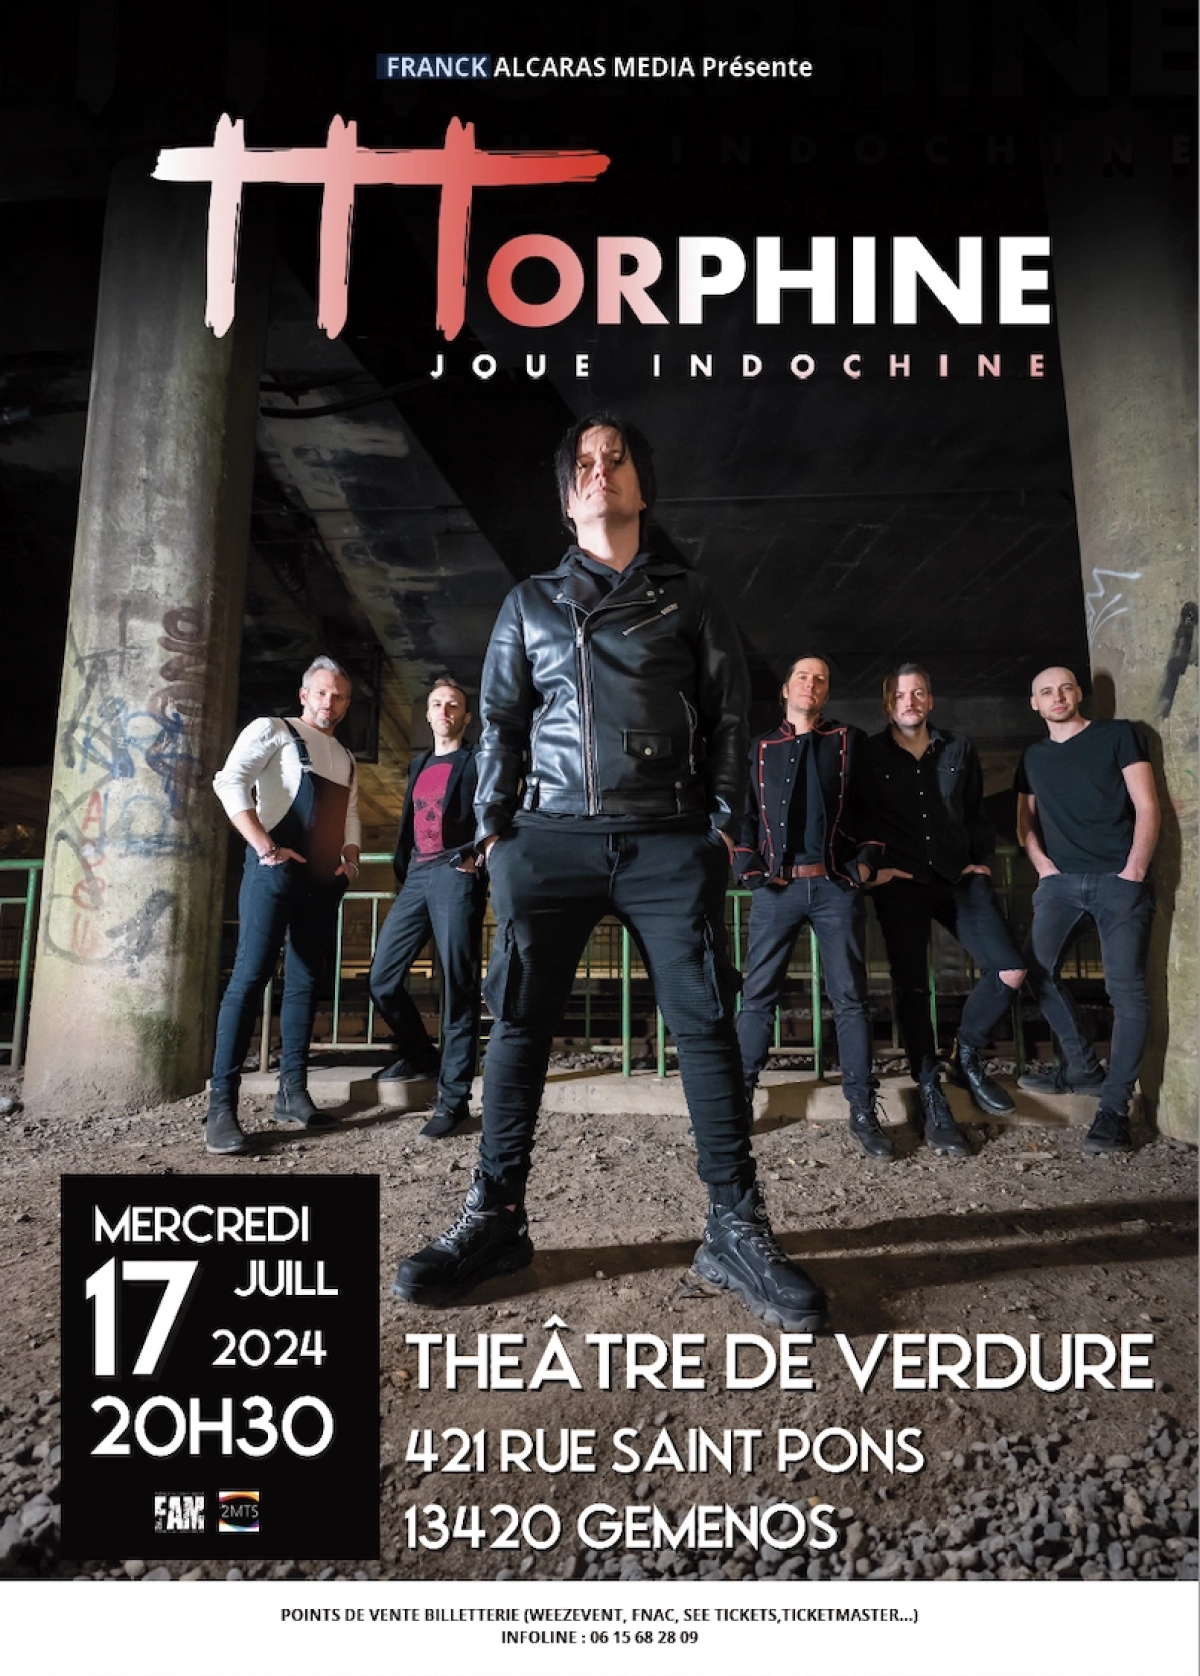 Morphine Joue Indochine at Theatre De Verdure Gemenos Tickets